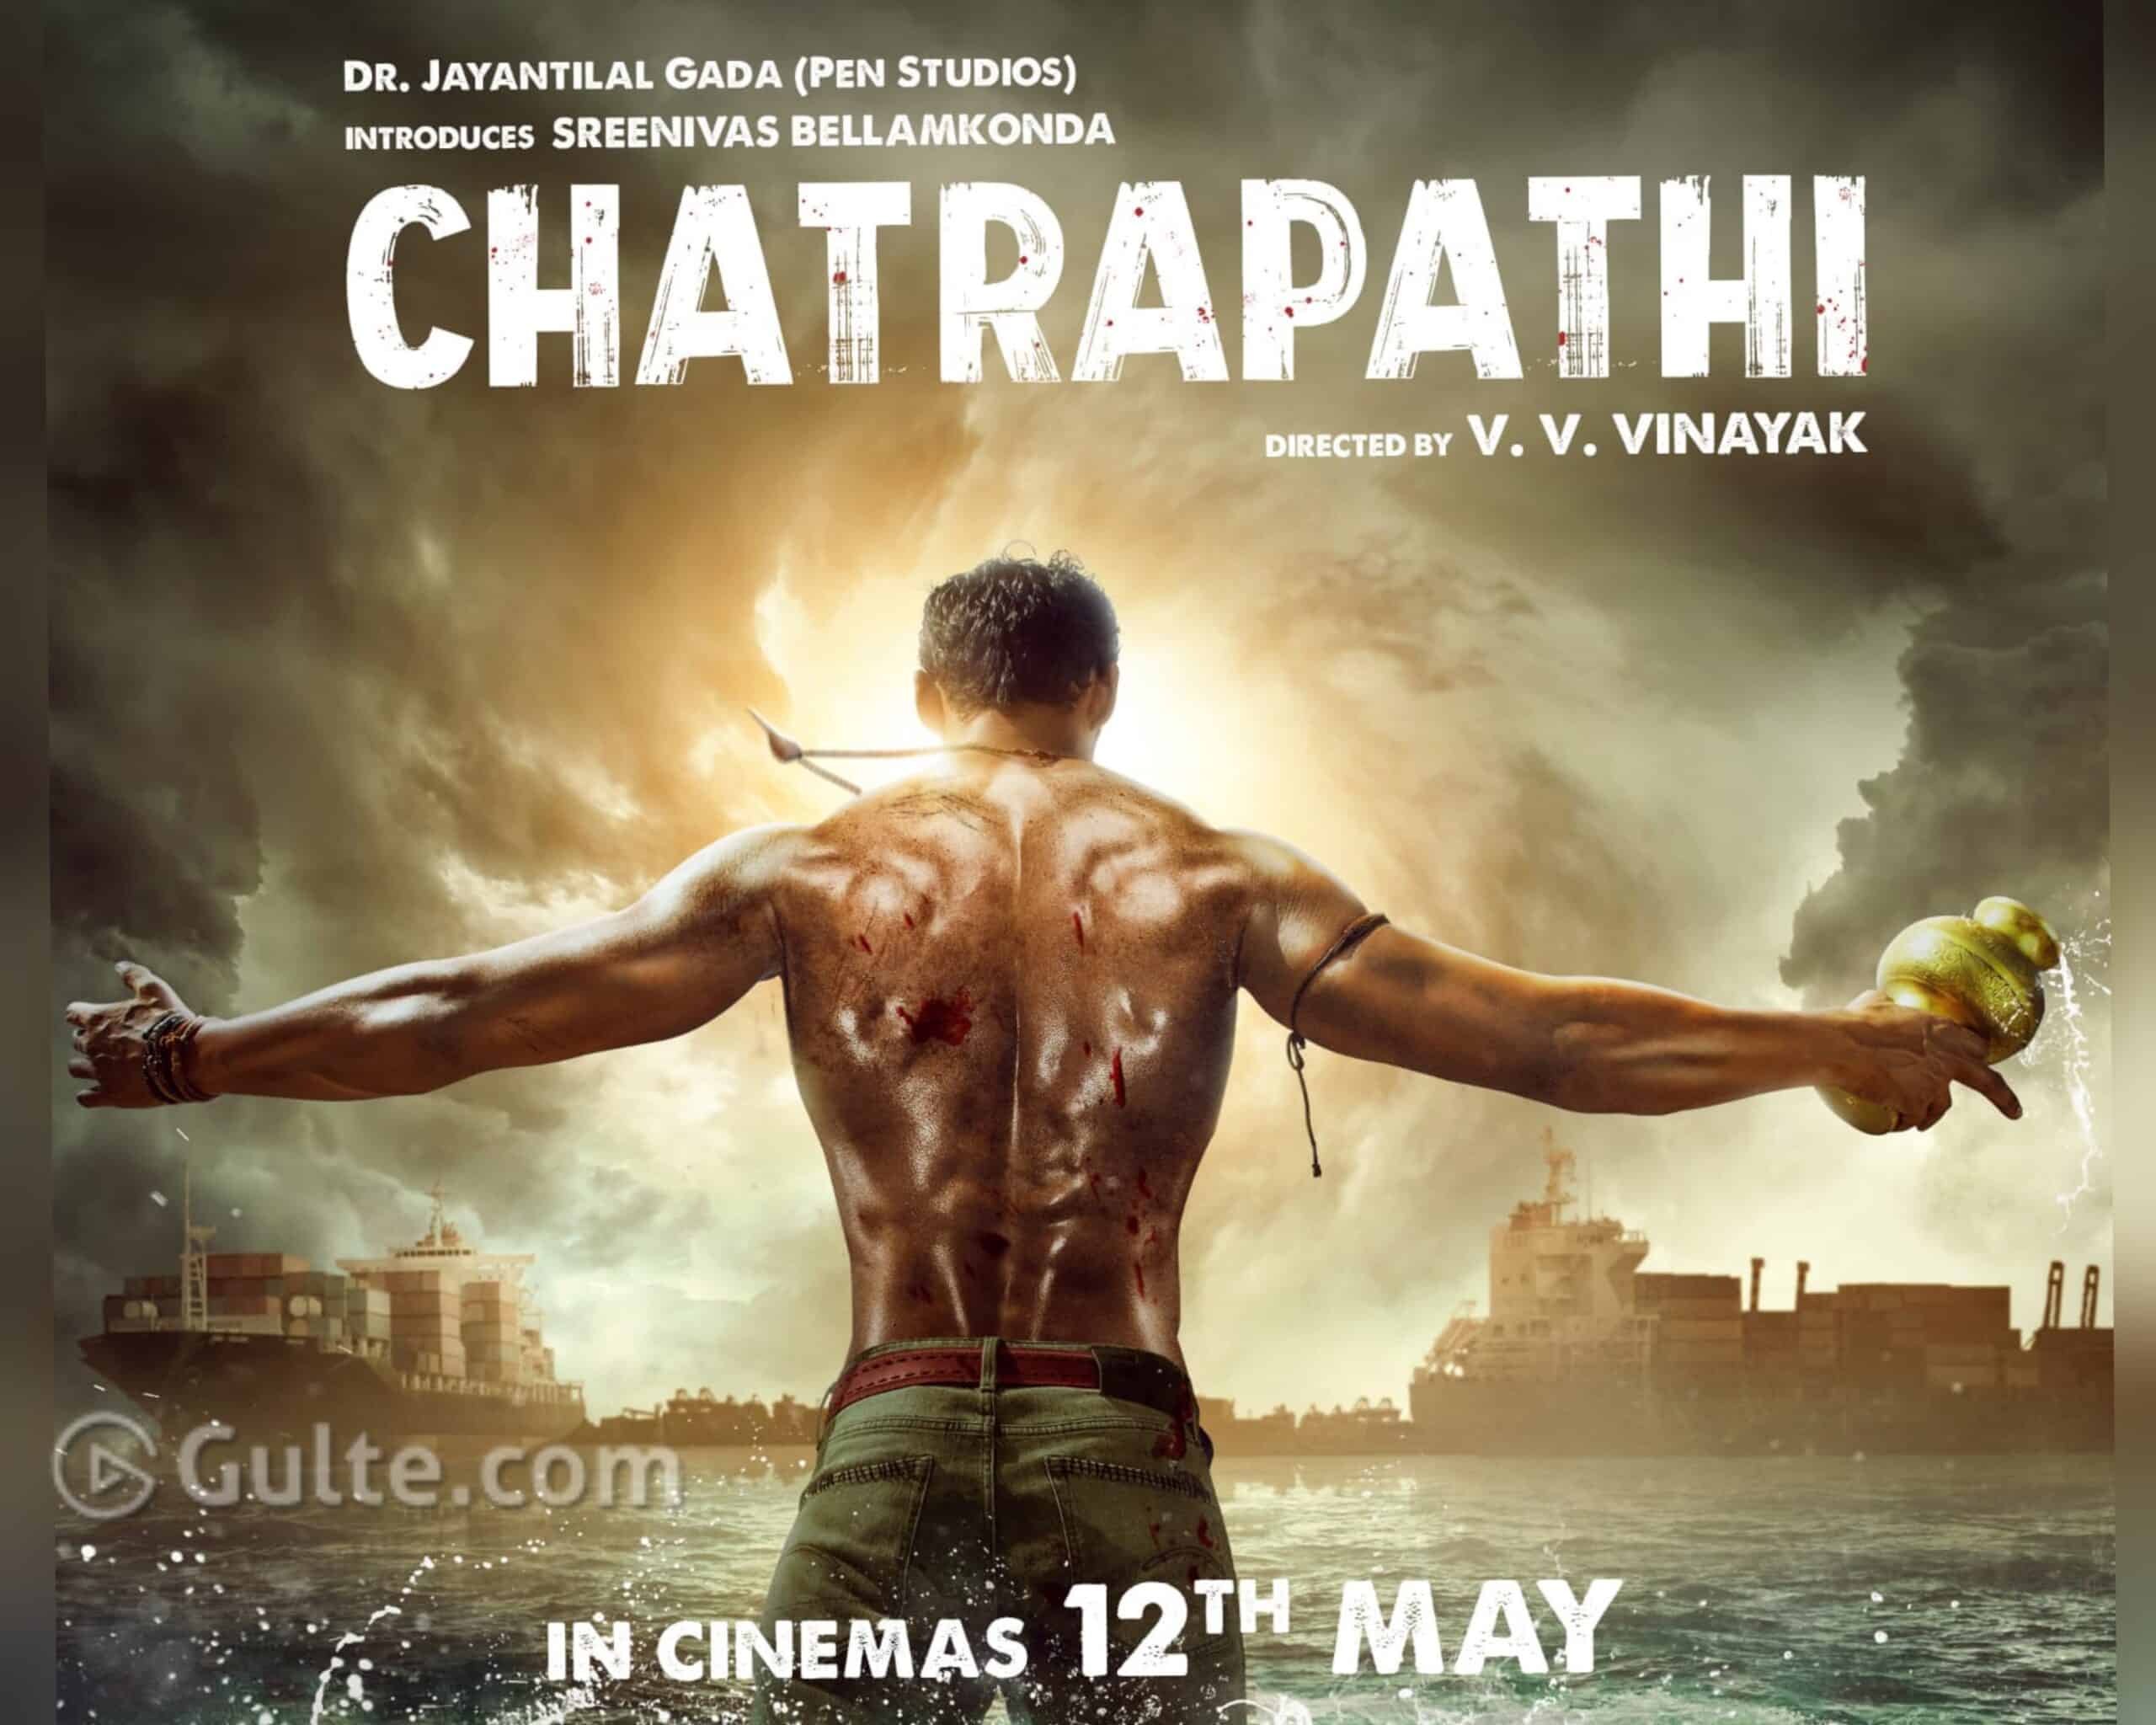 Chatrapathi-Remake